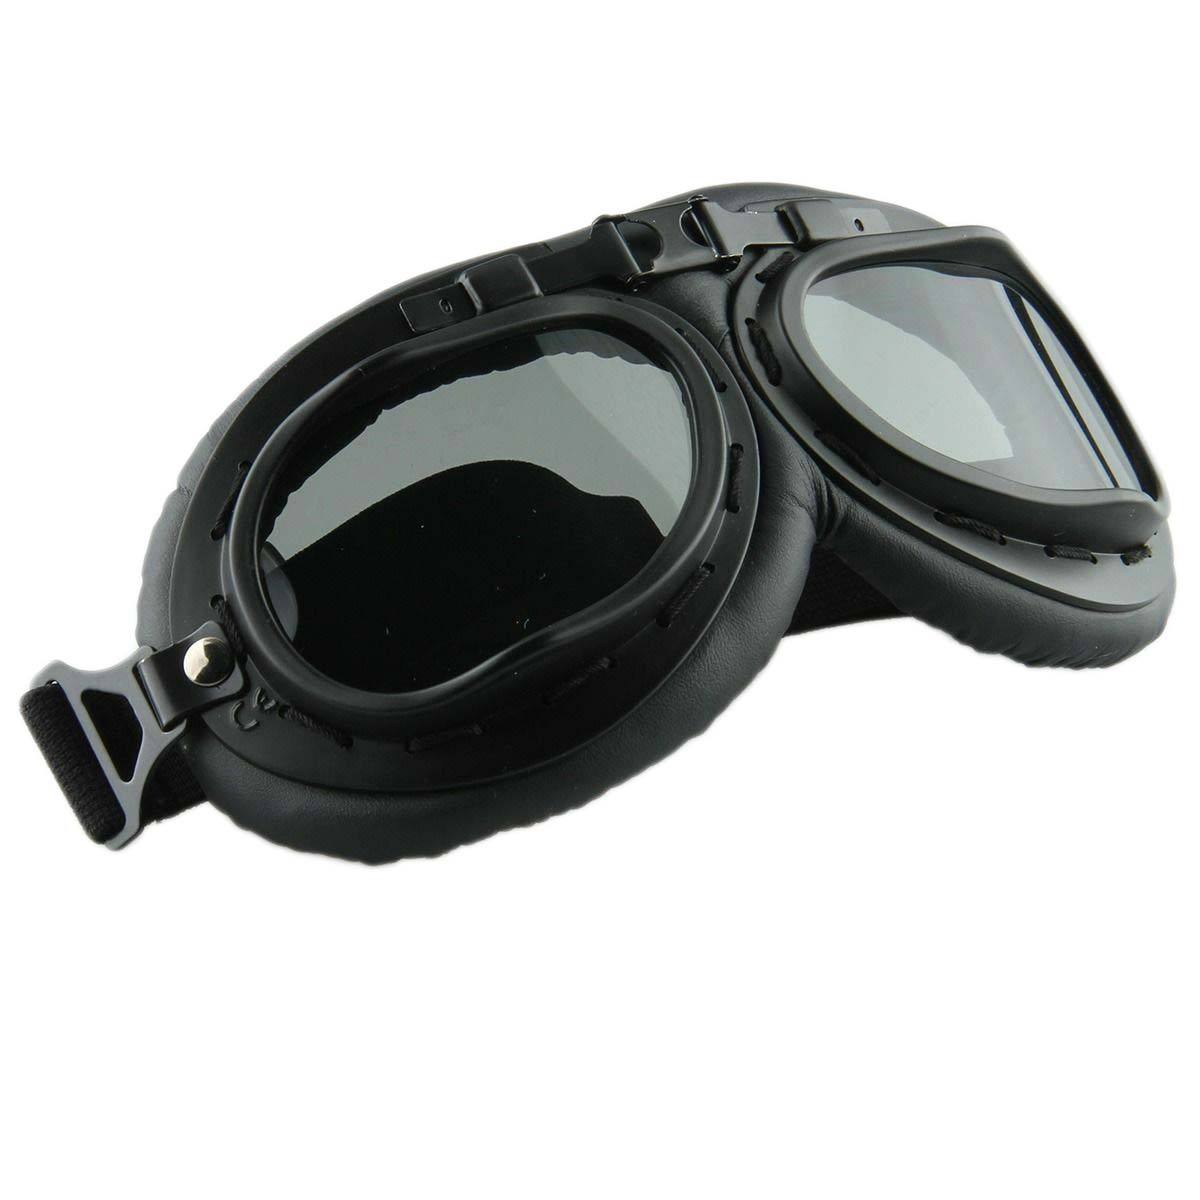 Retro Vintage Motorcycle Goggles Aviator Pilot Motocross Cruiser Eyewear Glass (Clear Len) - TDRMOTO